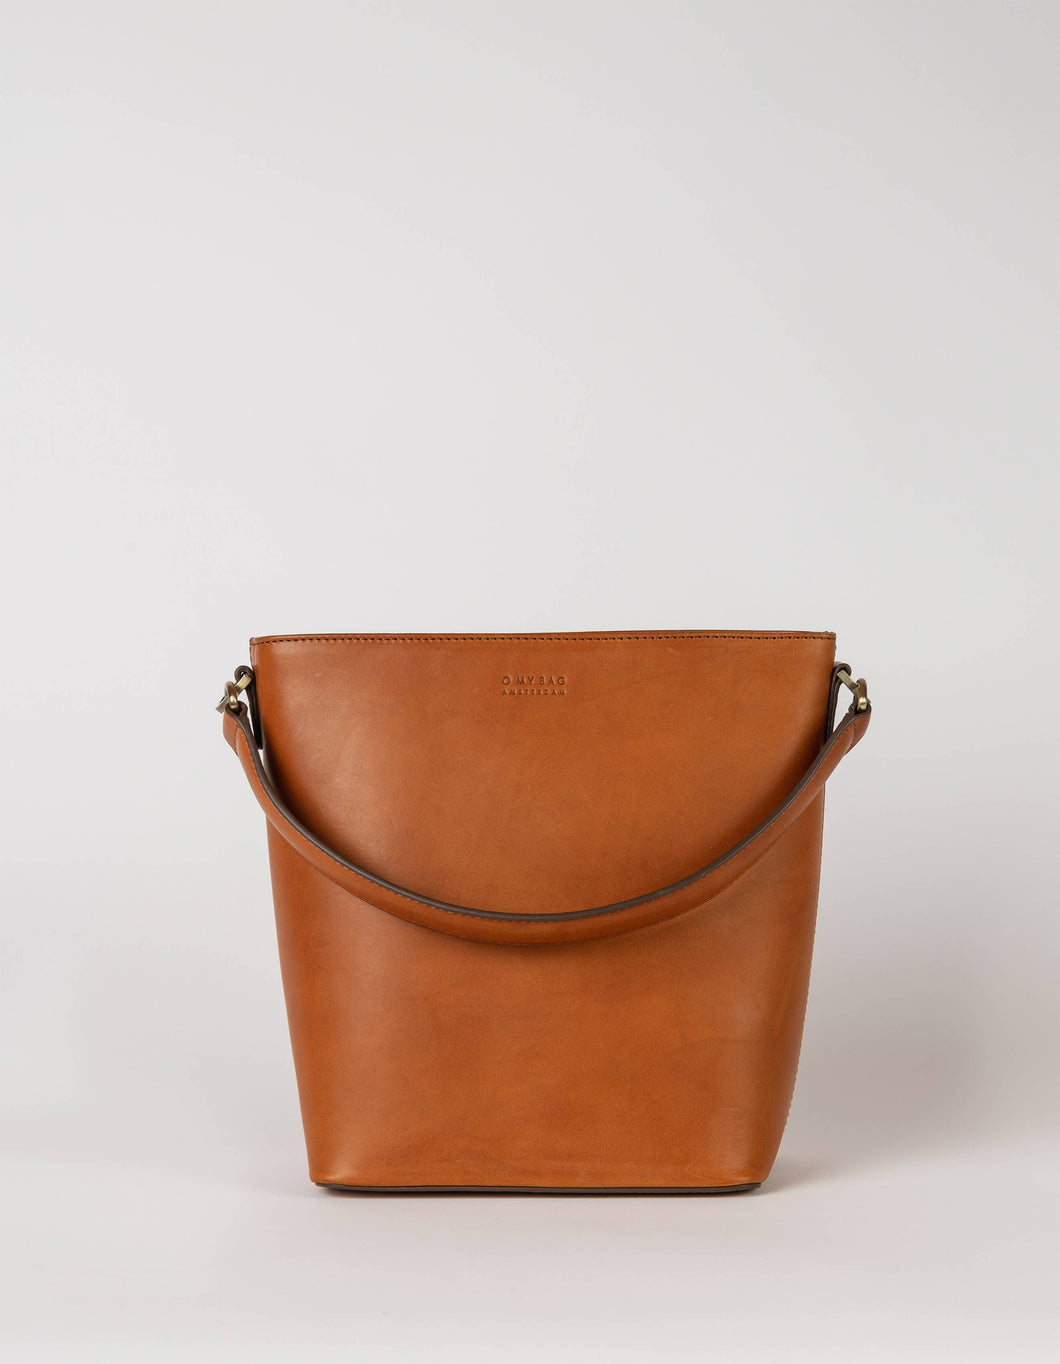 O My Bag - Leather Bag Bobbi Bucket Bag Maxi - Cognac Classic Leather